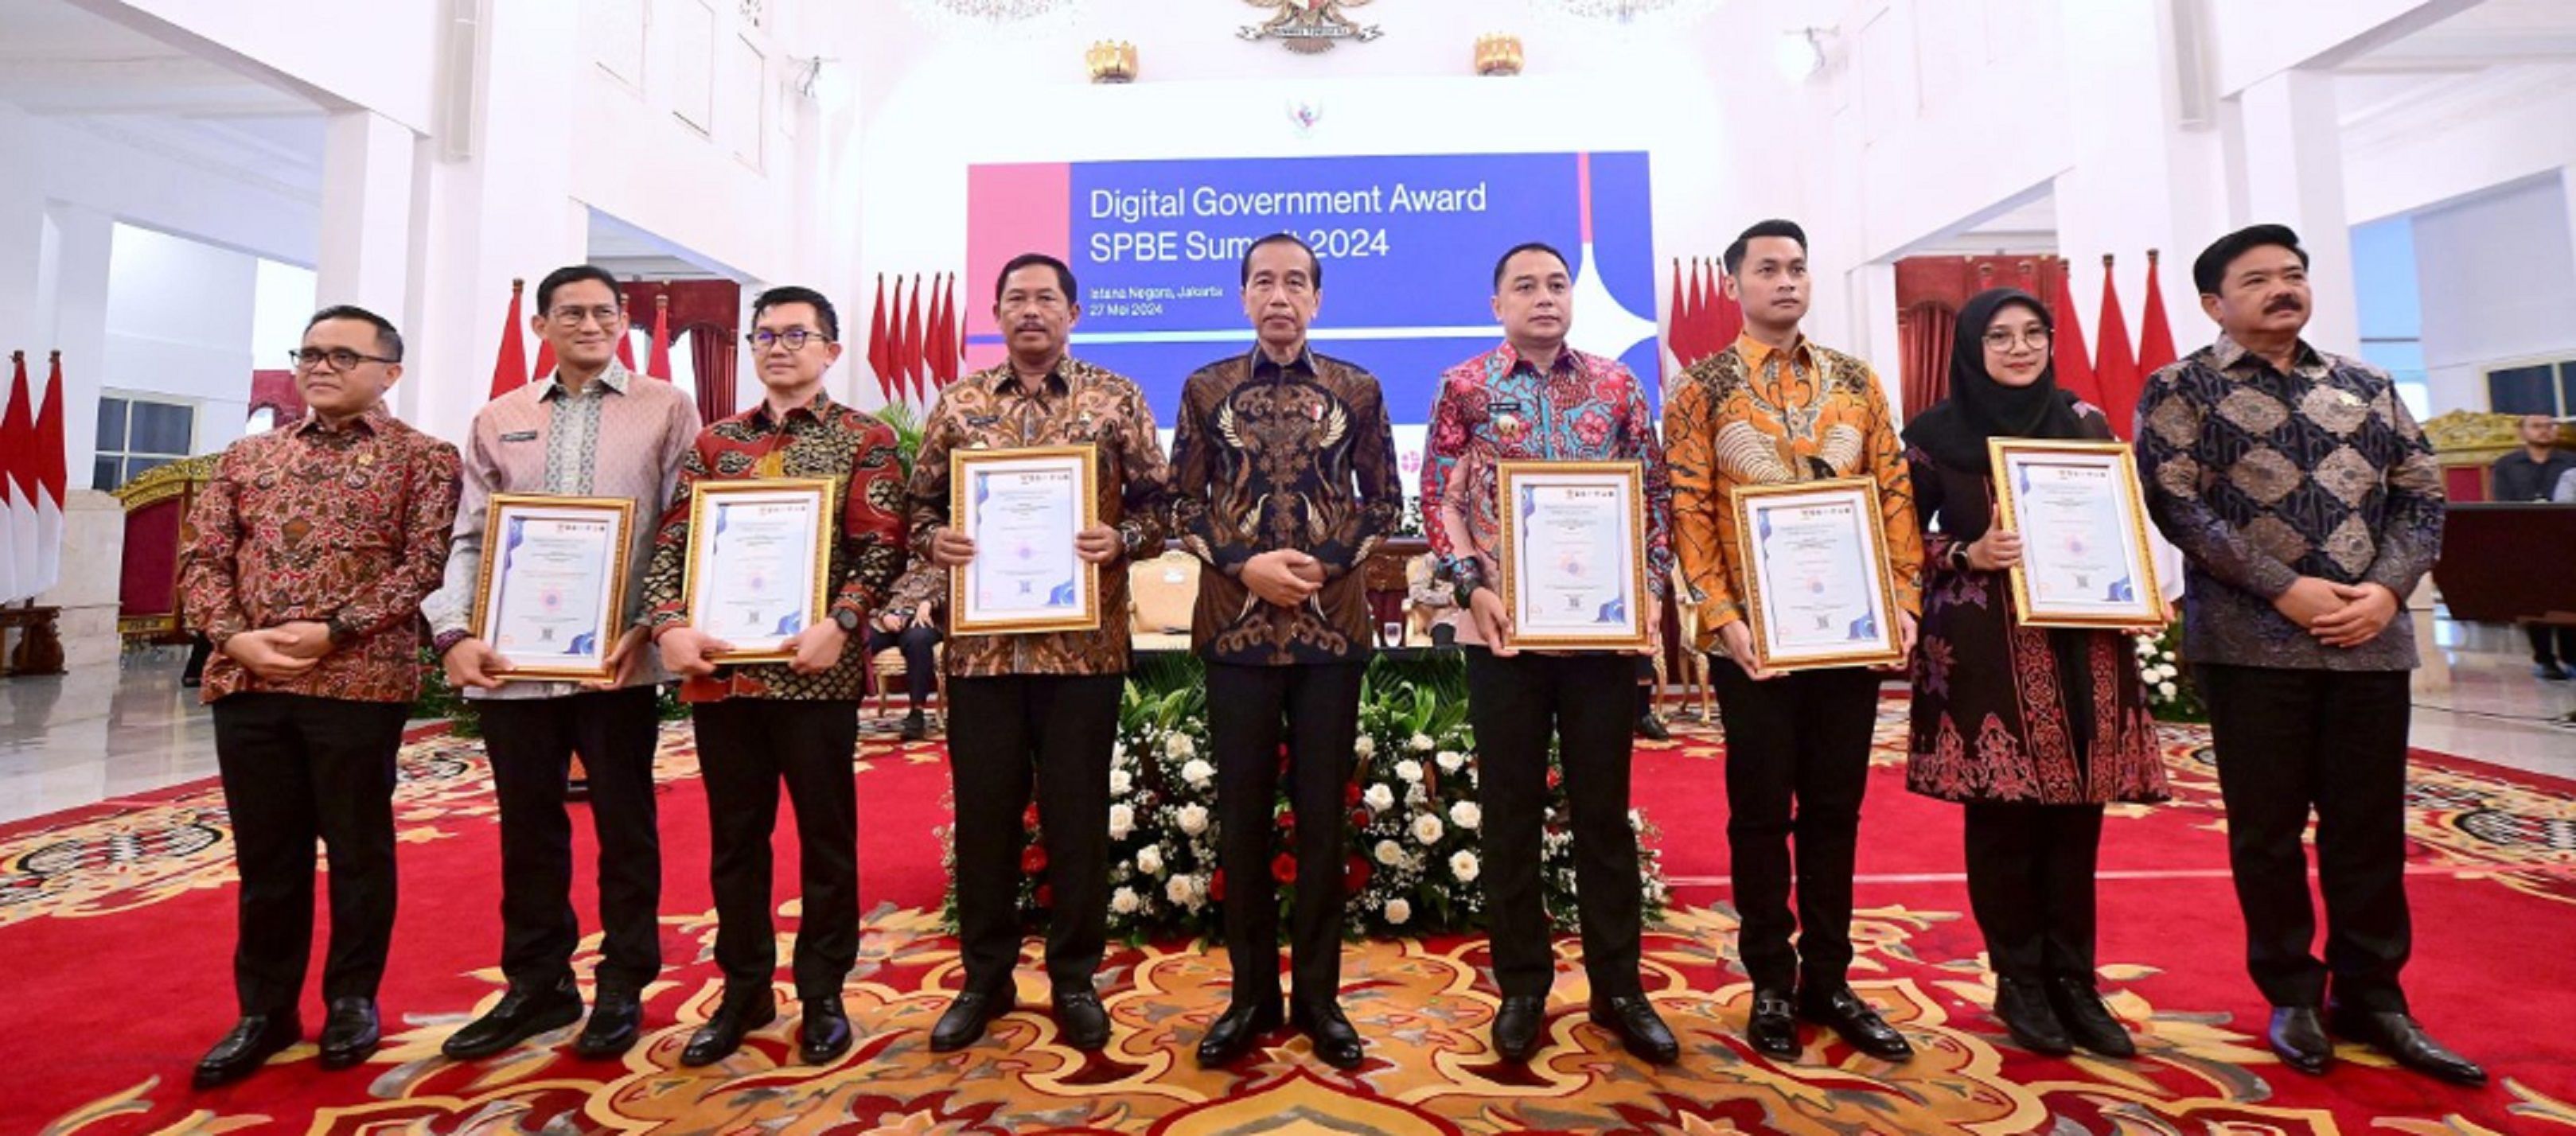  Digital Government Award SPBE Summit 2024